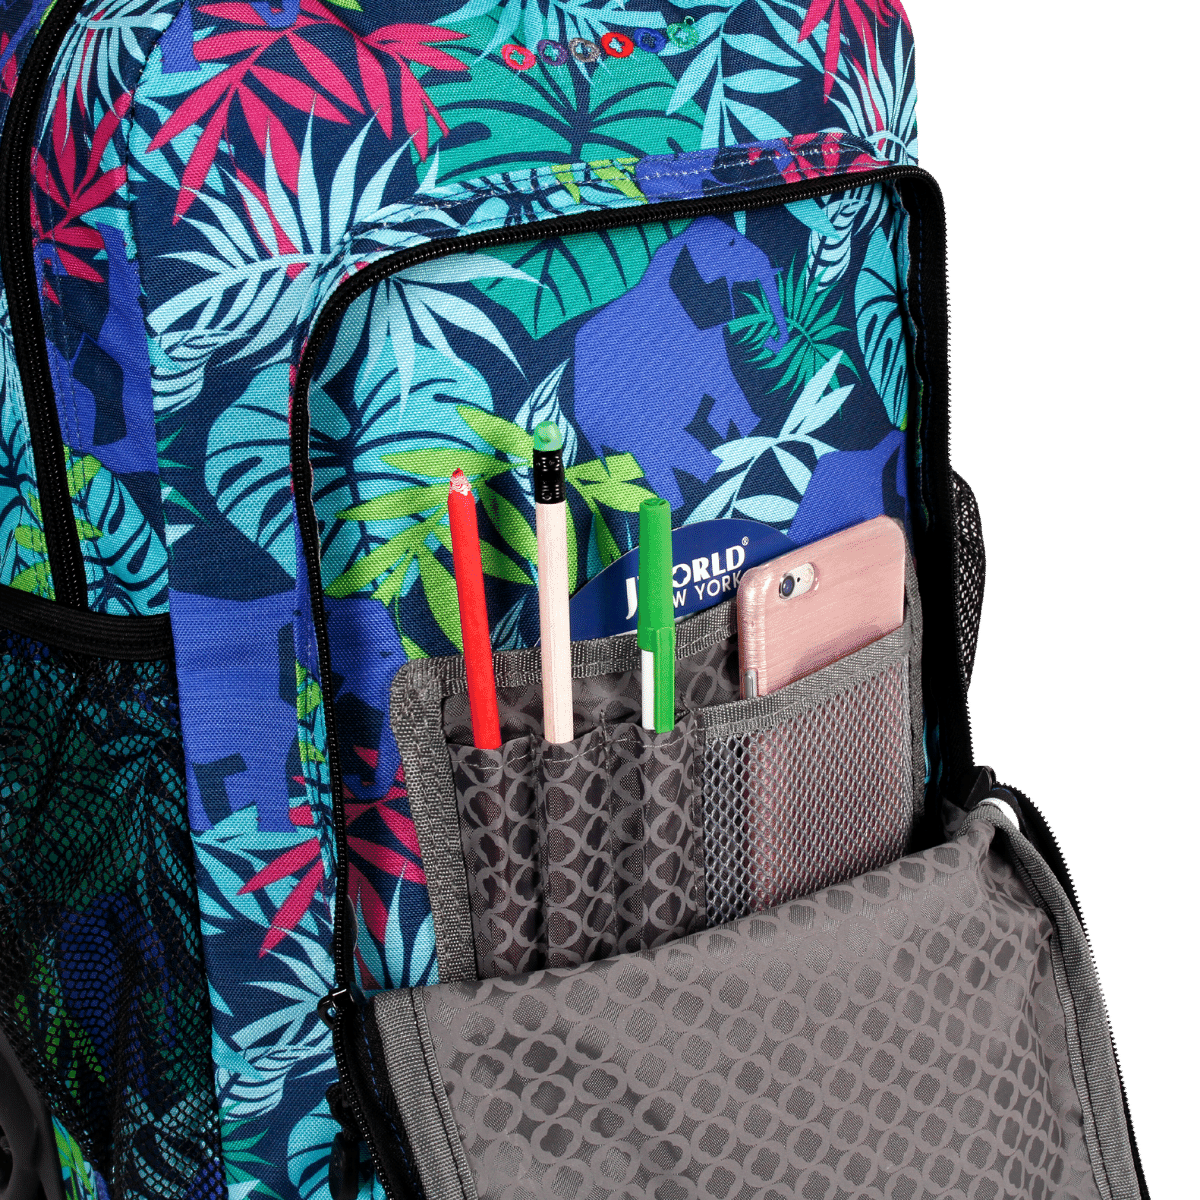 Sunny Rolling Backpack (17 Inch) - On Sale - JWorldstore